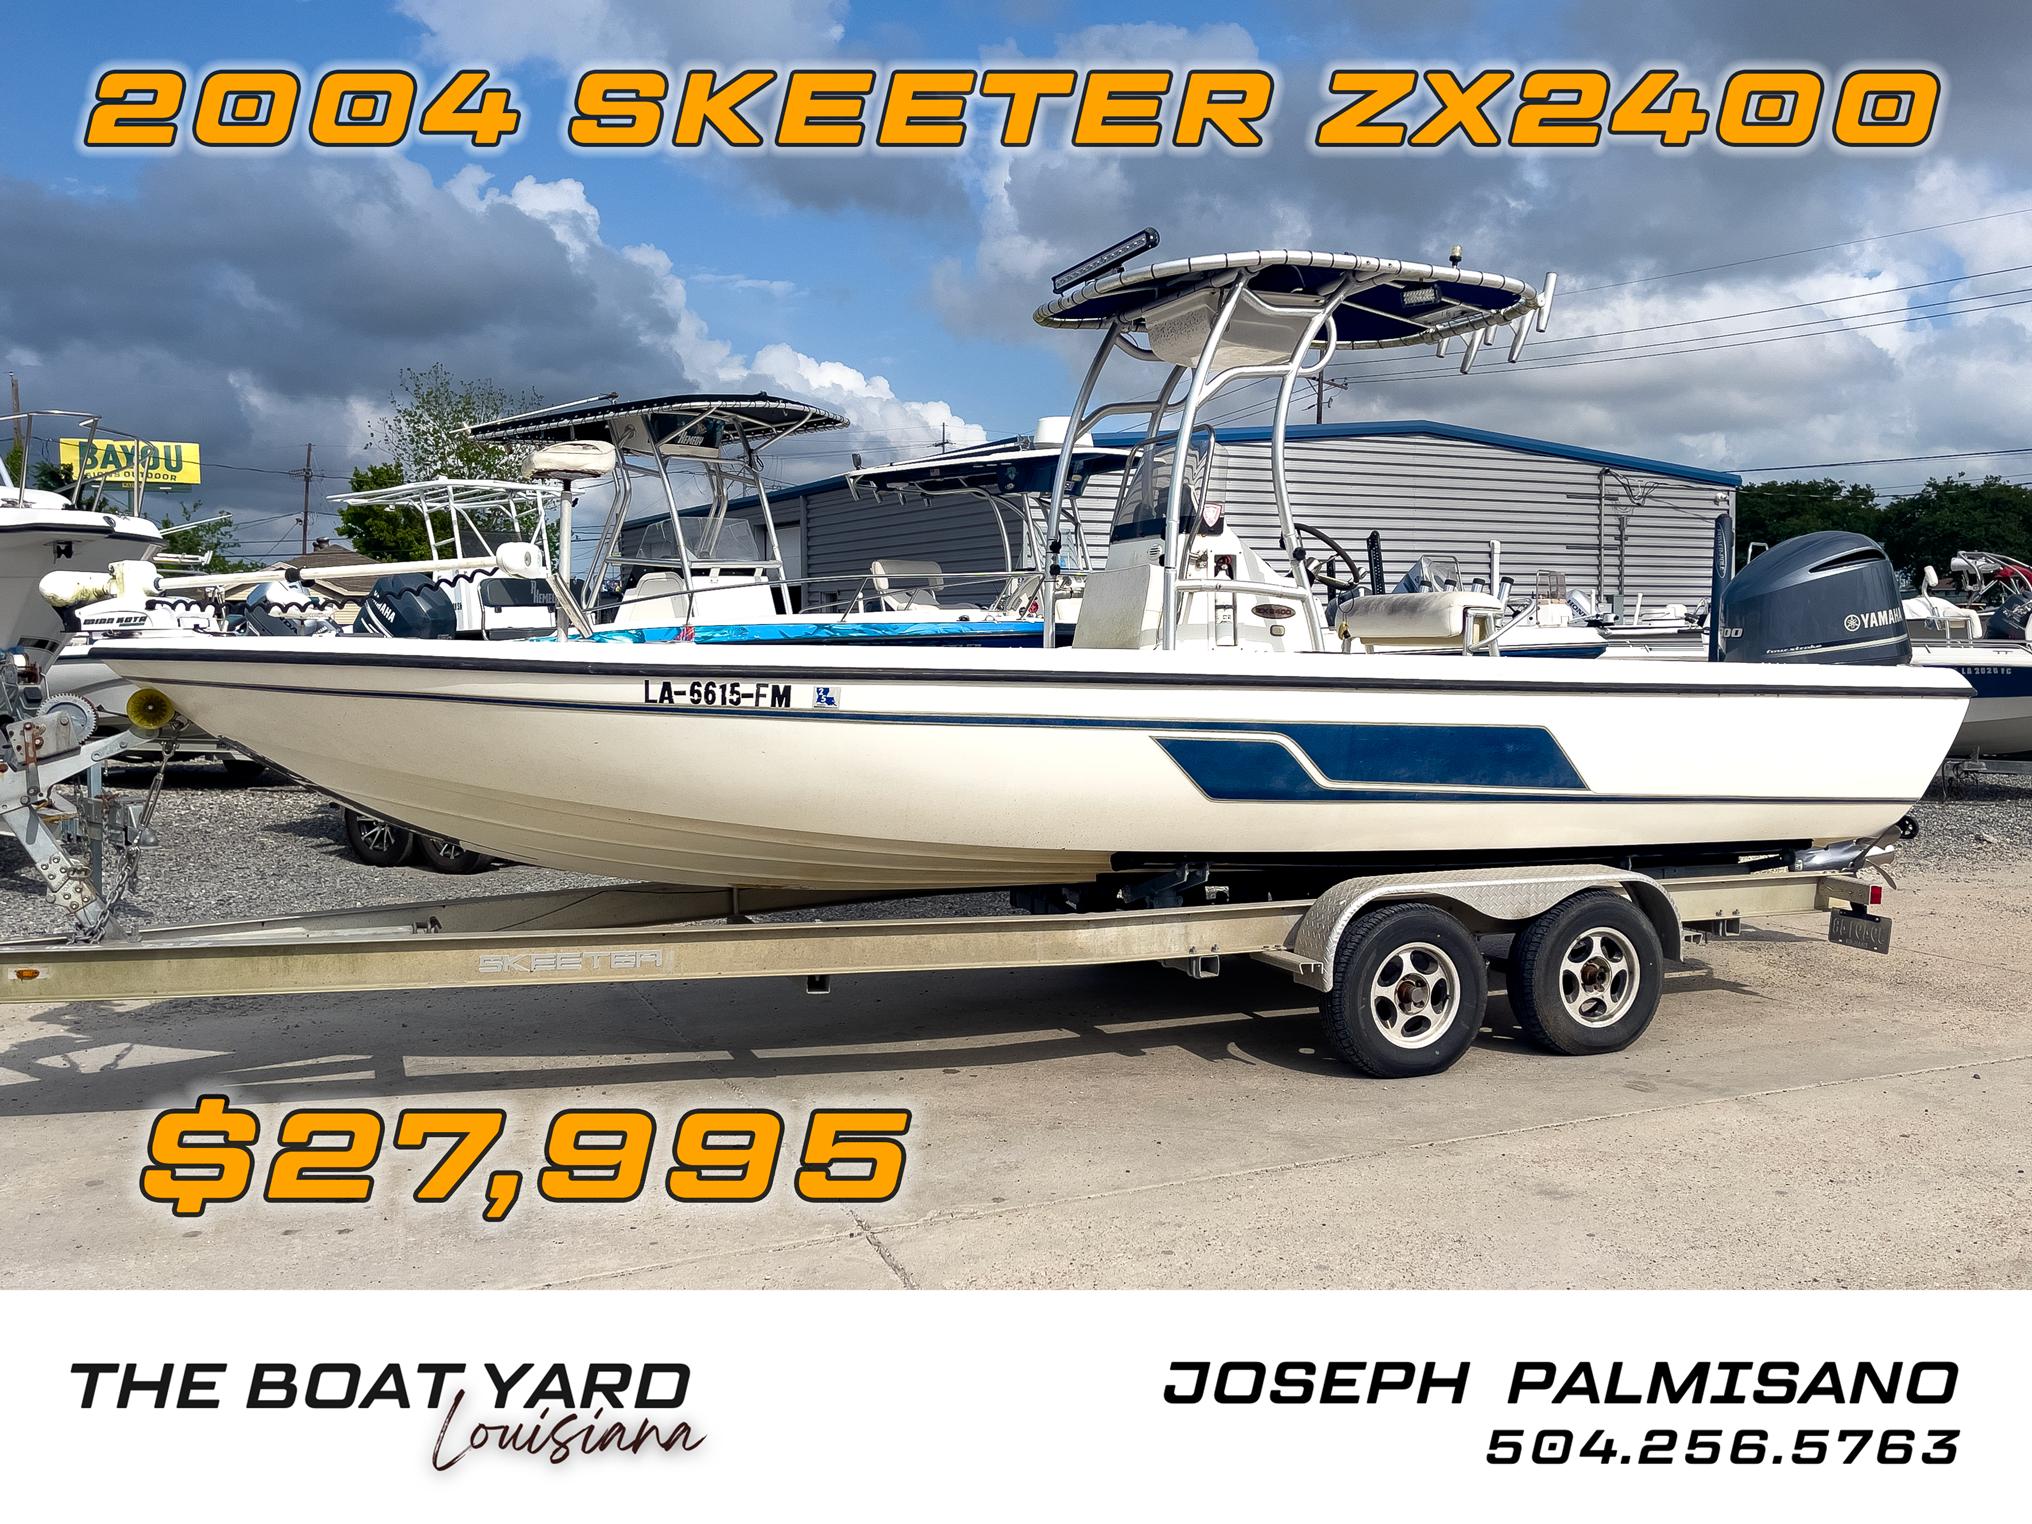 Skeeter Zx 2400 boats for sale - Boat Trader